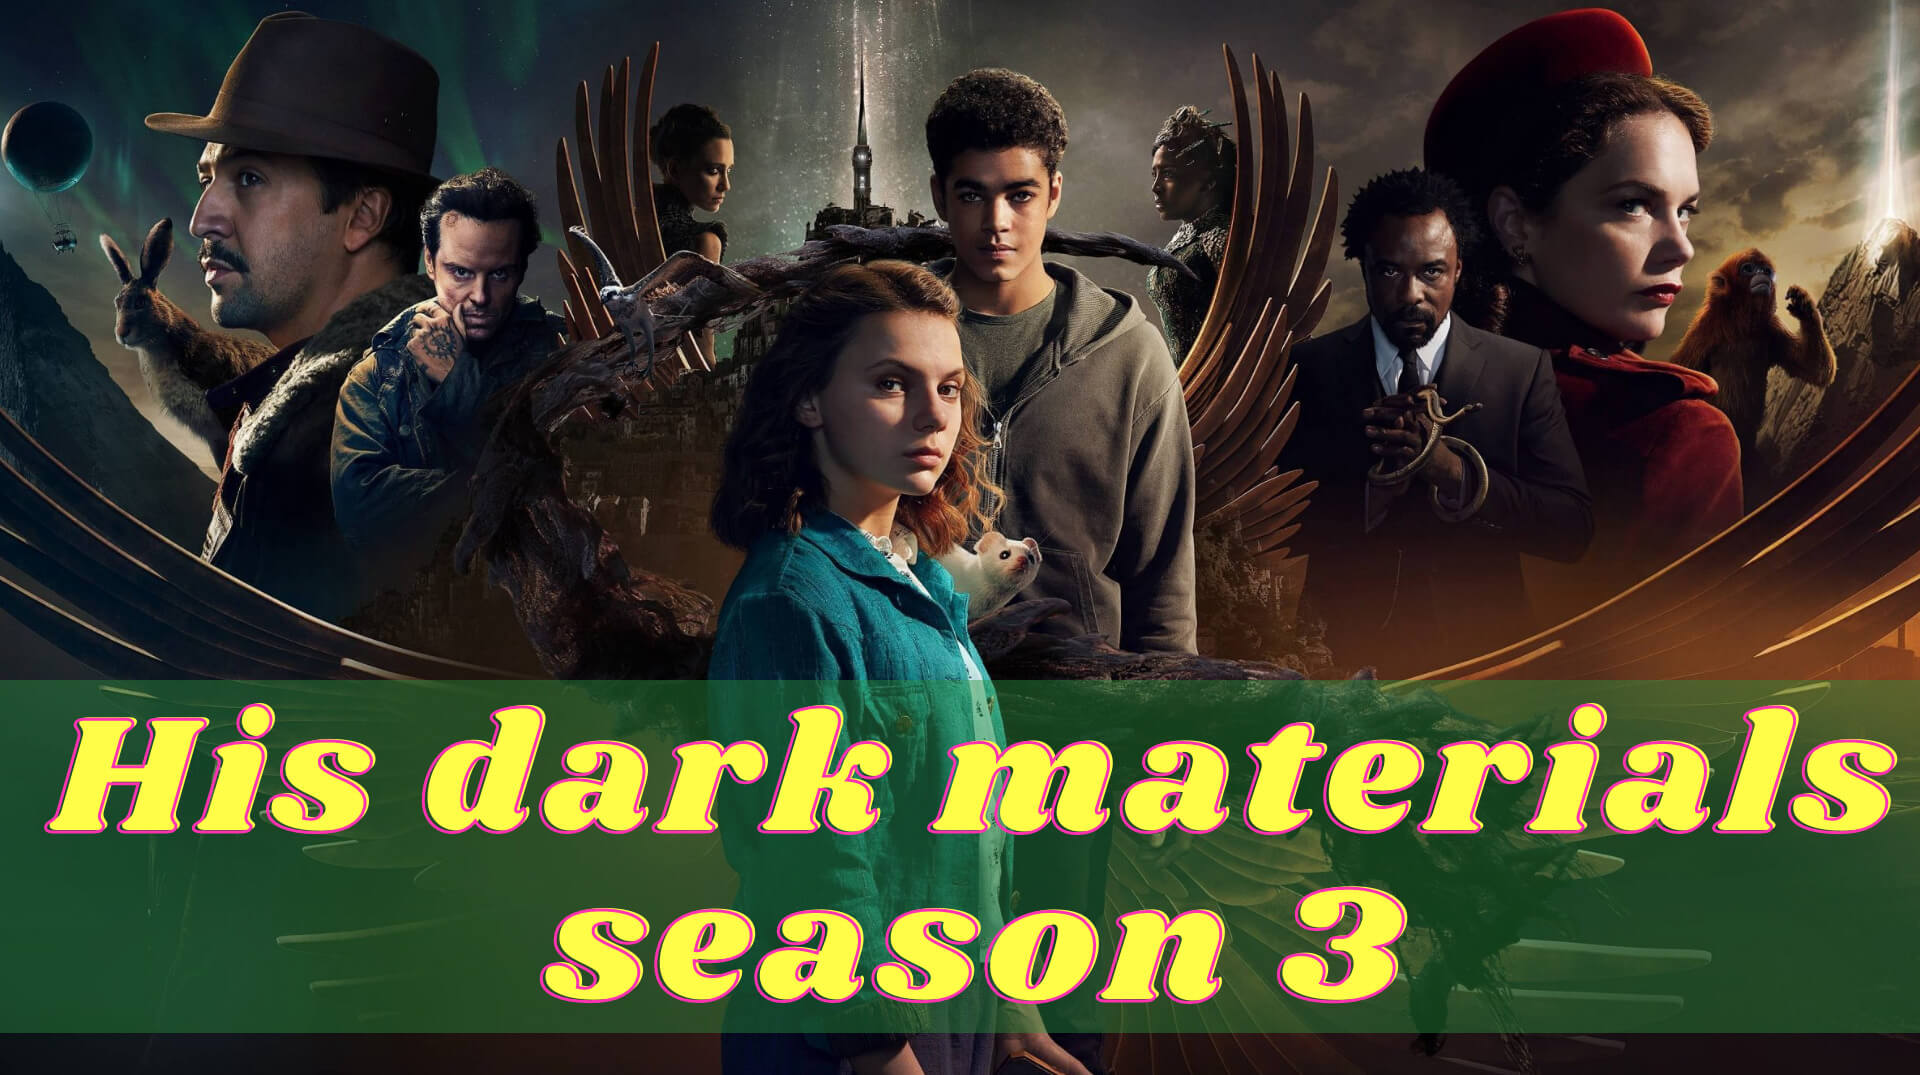 His dark materials season 3